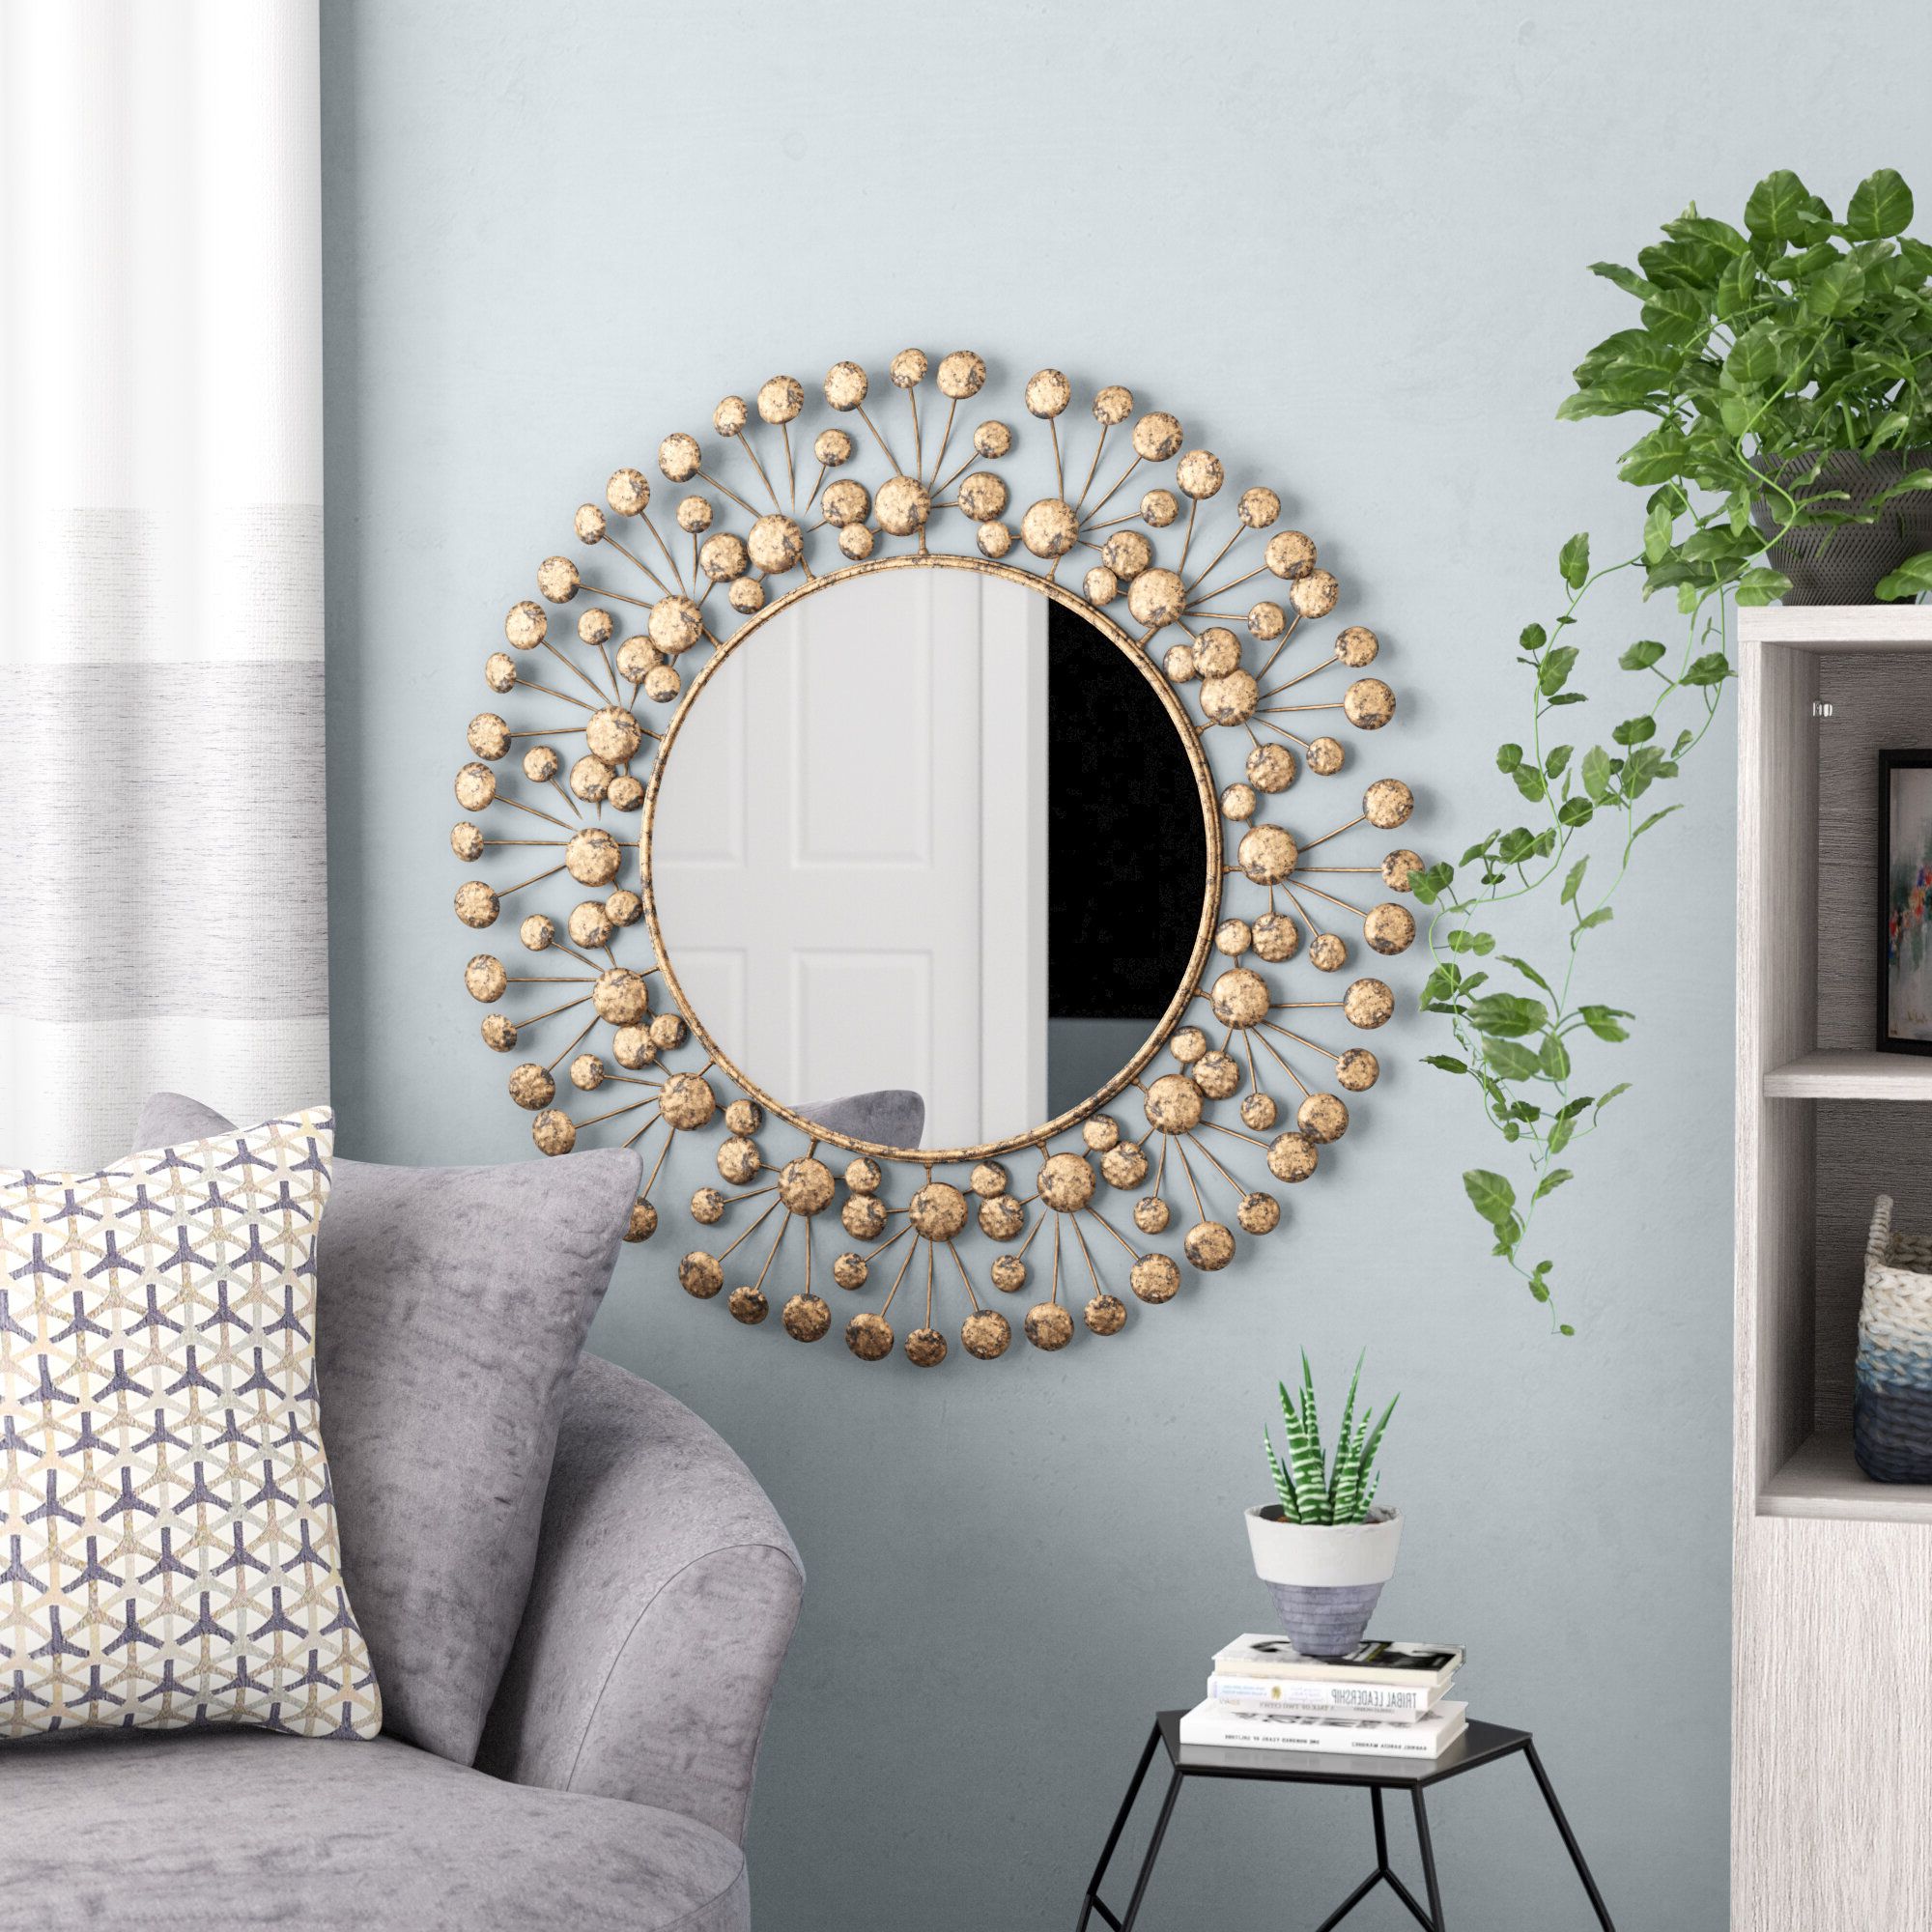 Eisenbarth Oversized Decorative Round Wall Mirror In Recent Round Decorative Wall Mirrors (Photo 4 of 20)